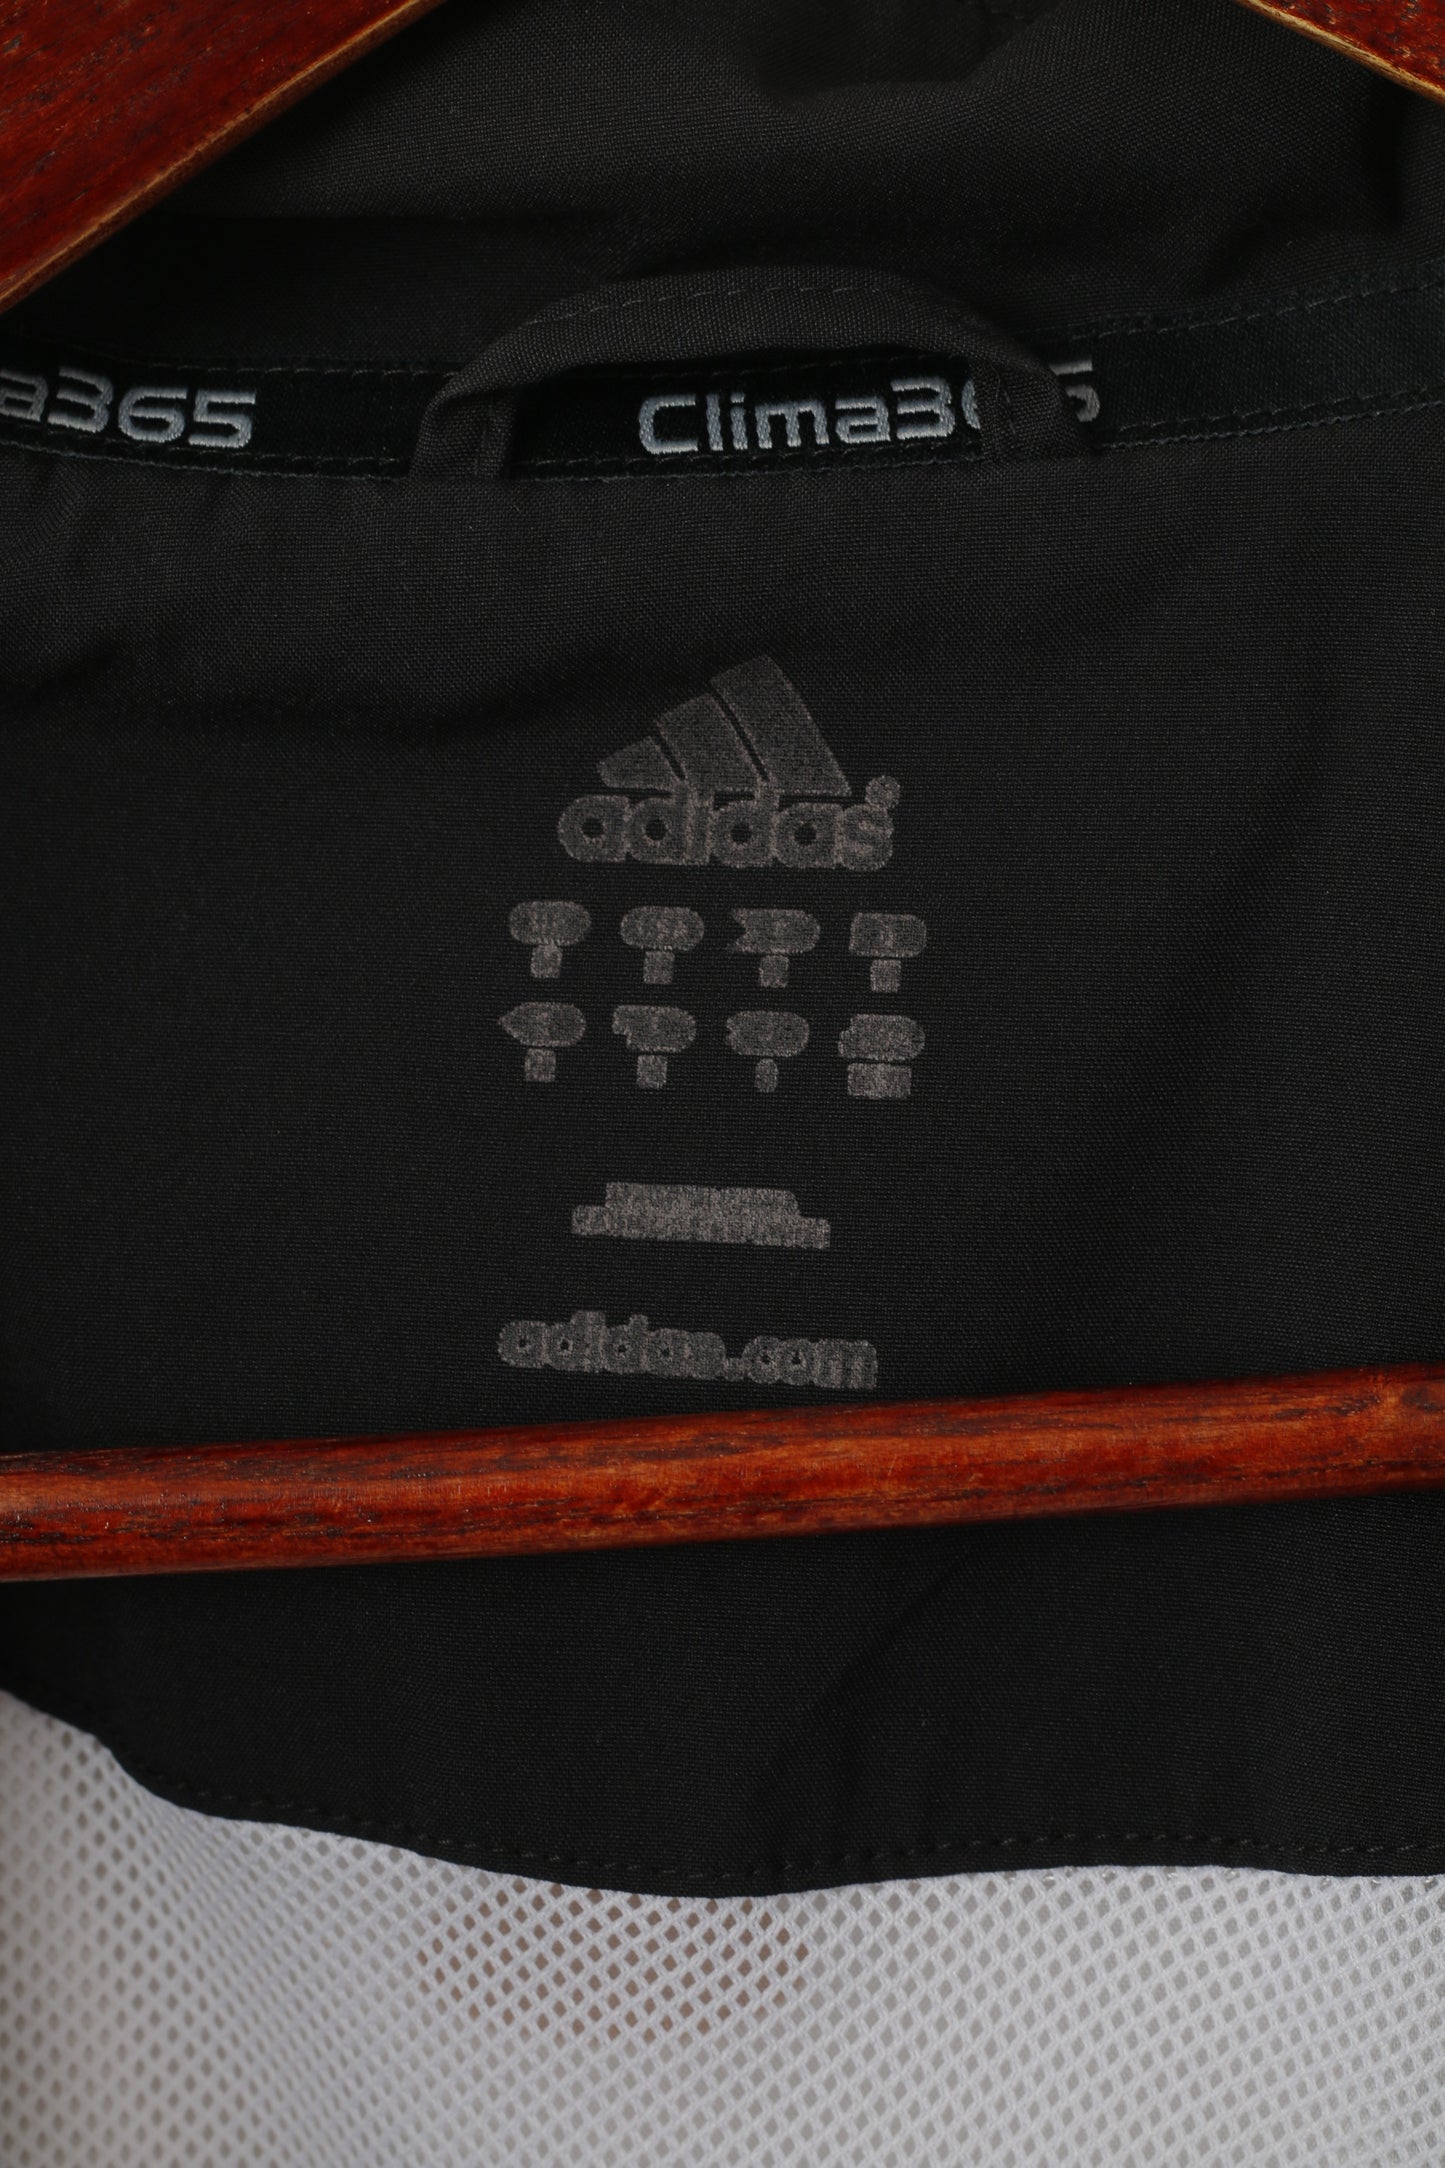 Adidas Men M Jacket Black Clima 365 Lightweight Activewear Training Track Top